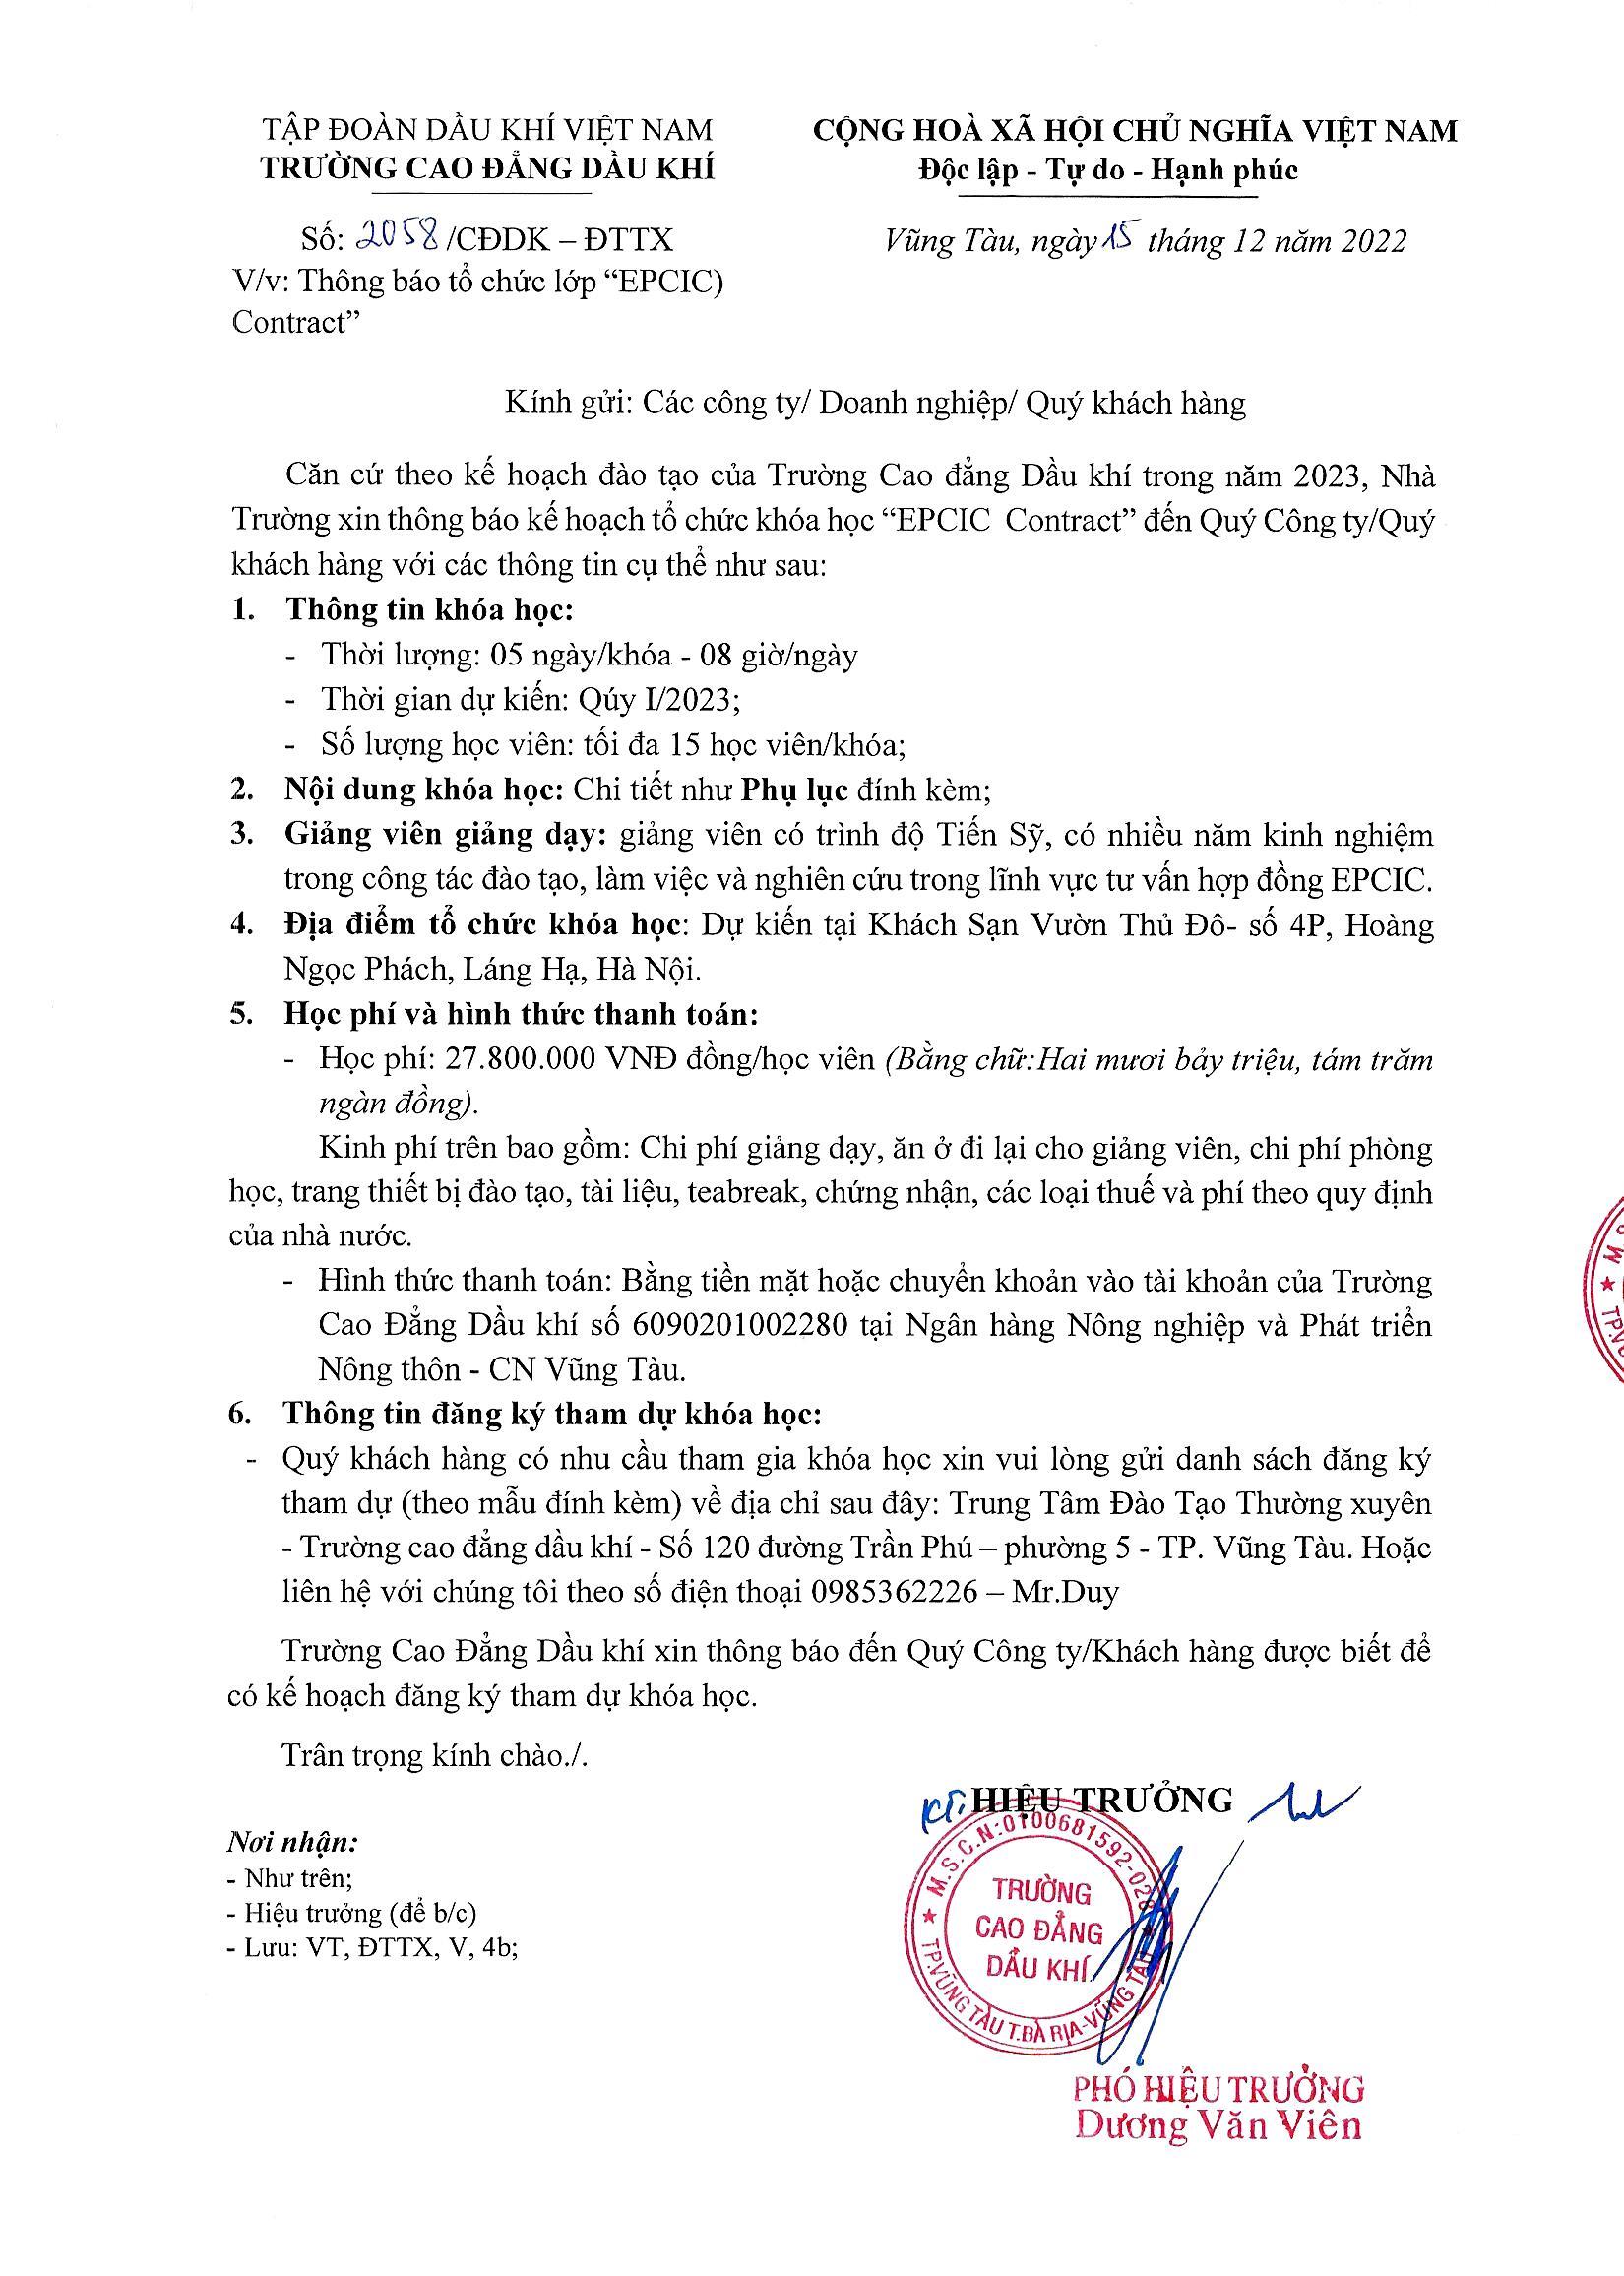 Cv 2058 Thong Bao Lop Epcic Page 1 Image 0001